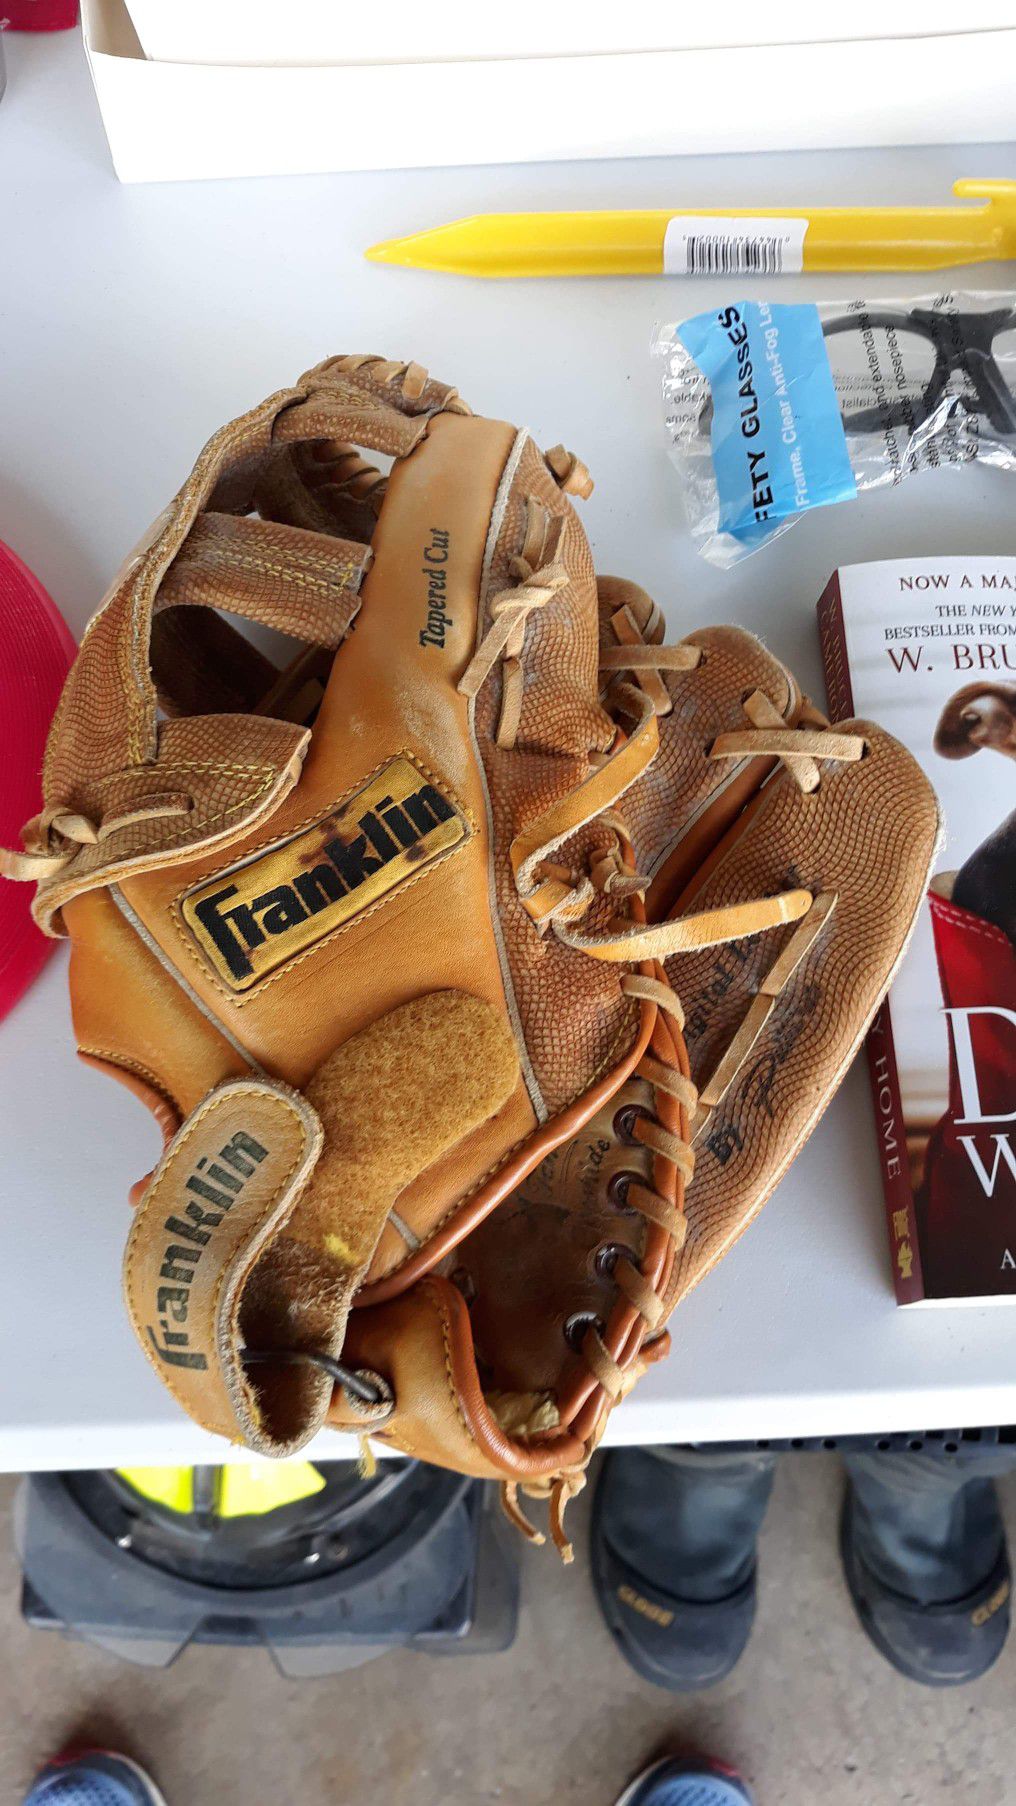 Franklin Adult softball glove